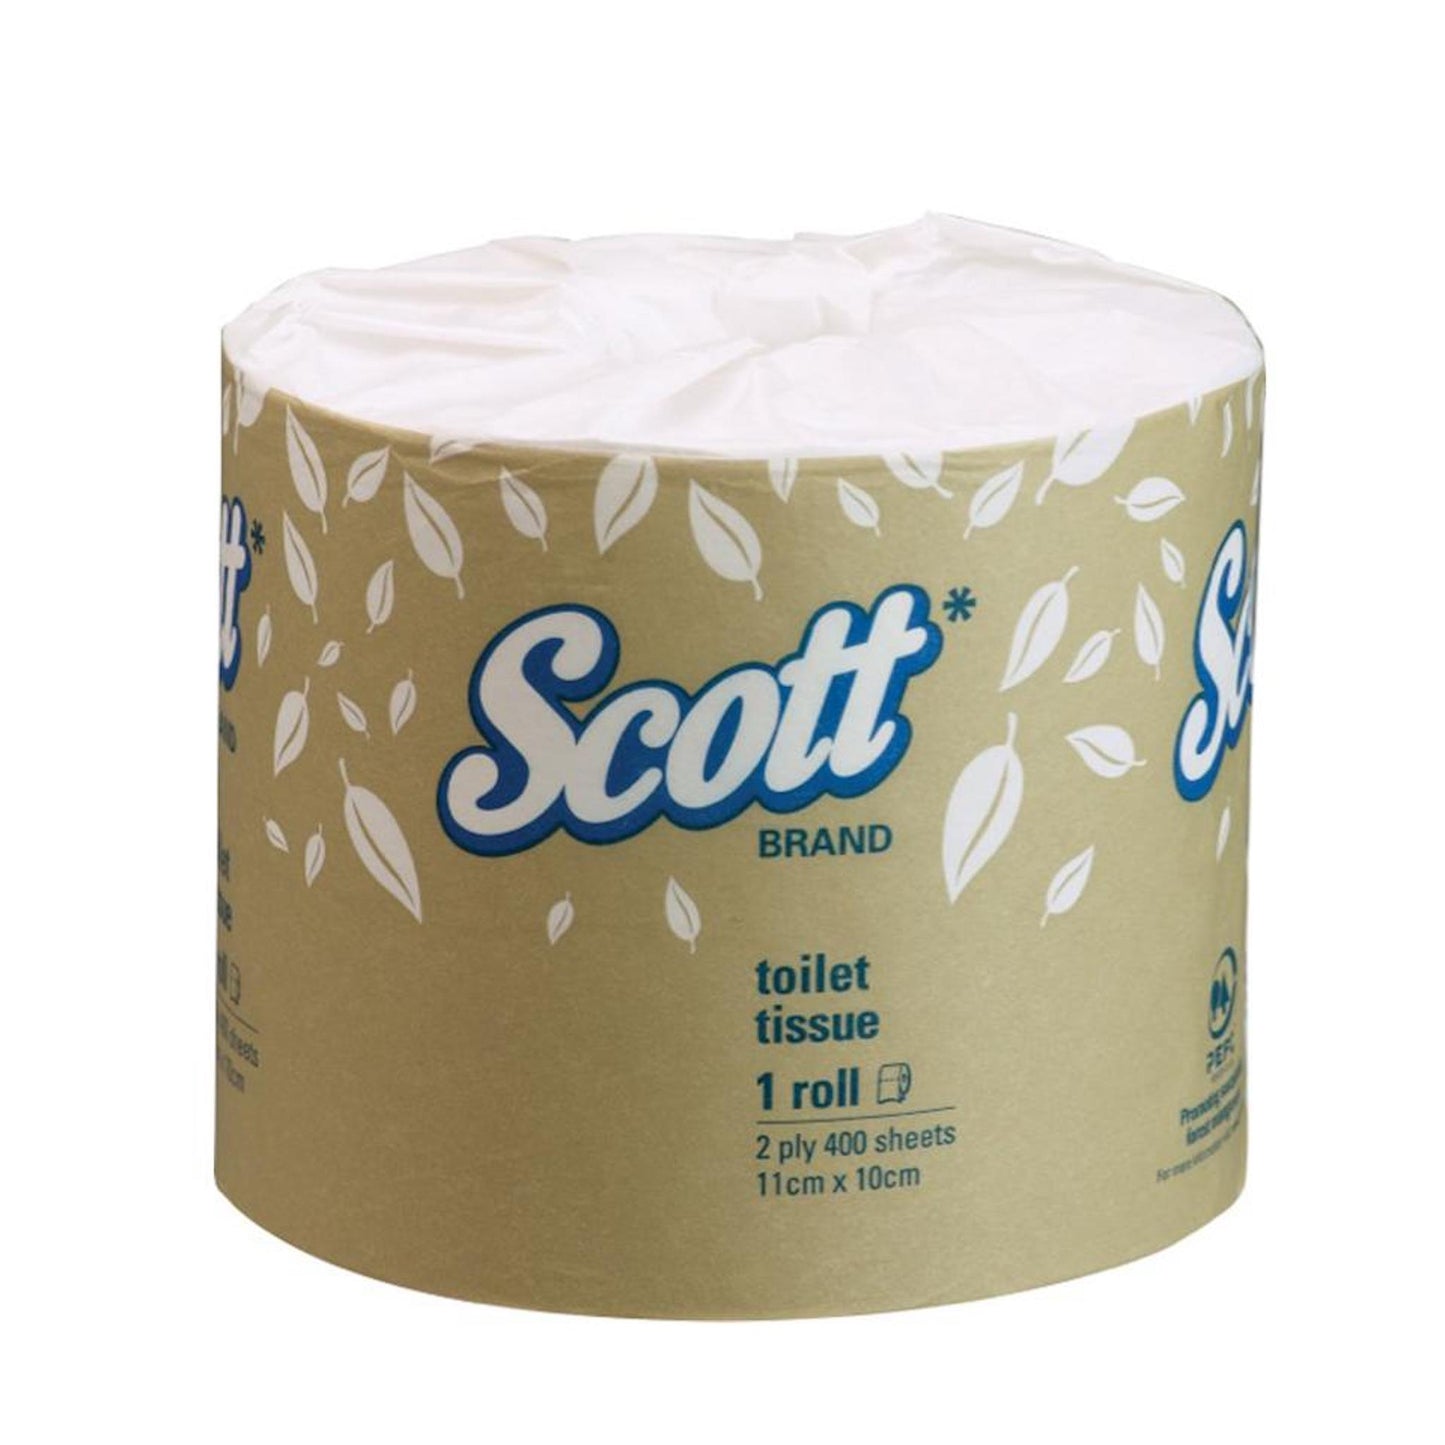 Scott 5741 Toilet Paper Roll 2 Ply 400 Sheets White Each